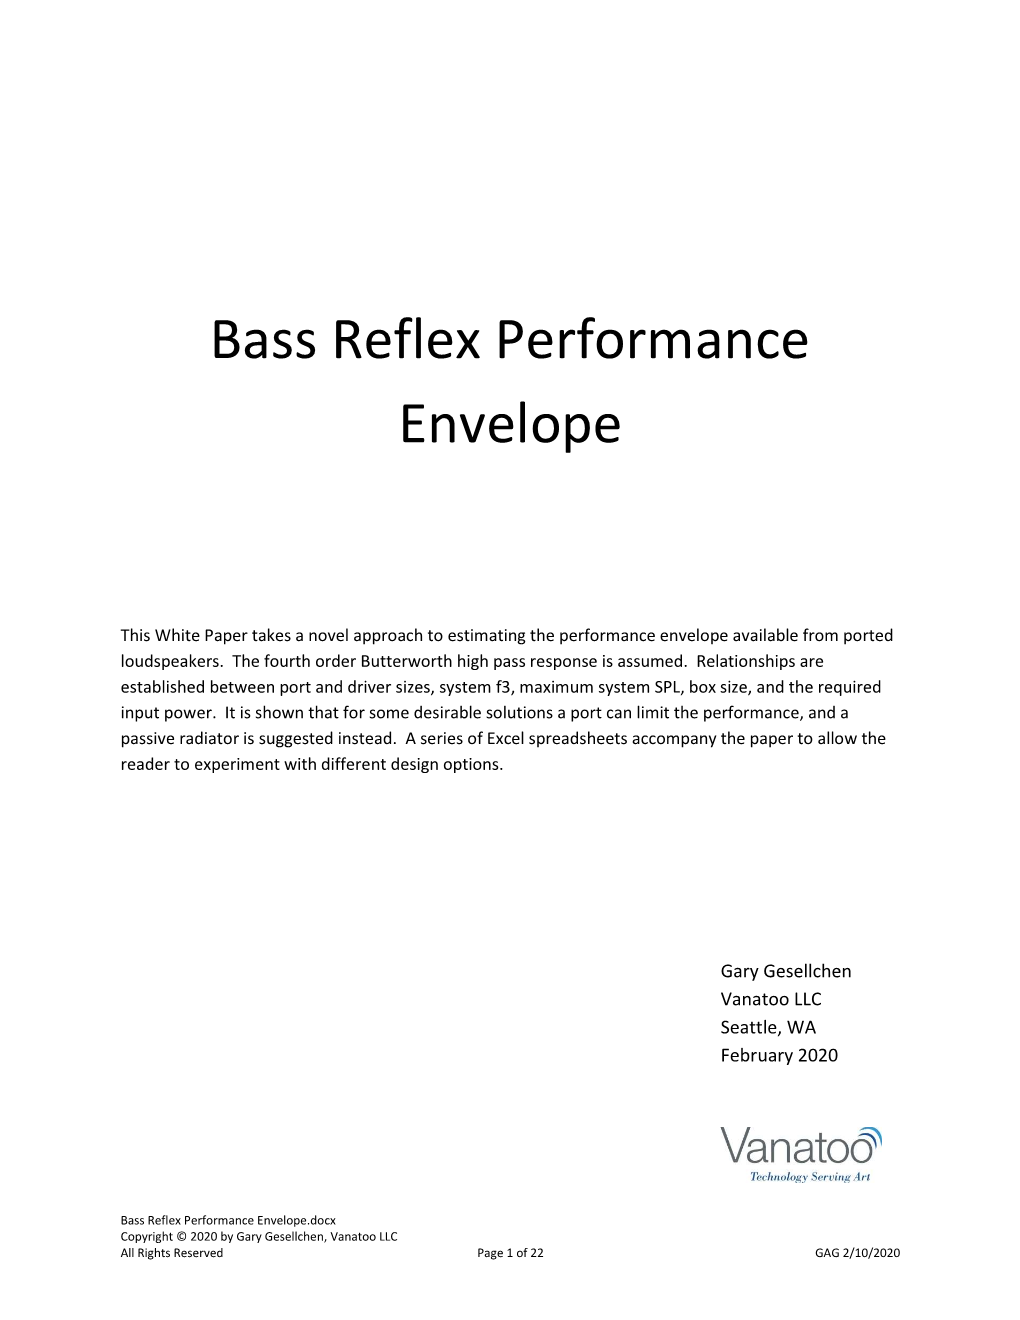 Bass Reflex Performance Envelope